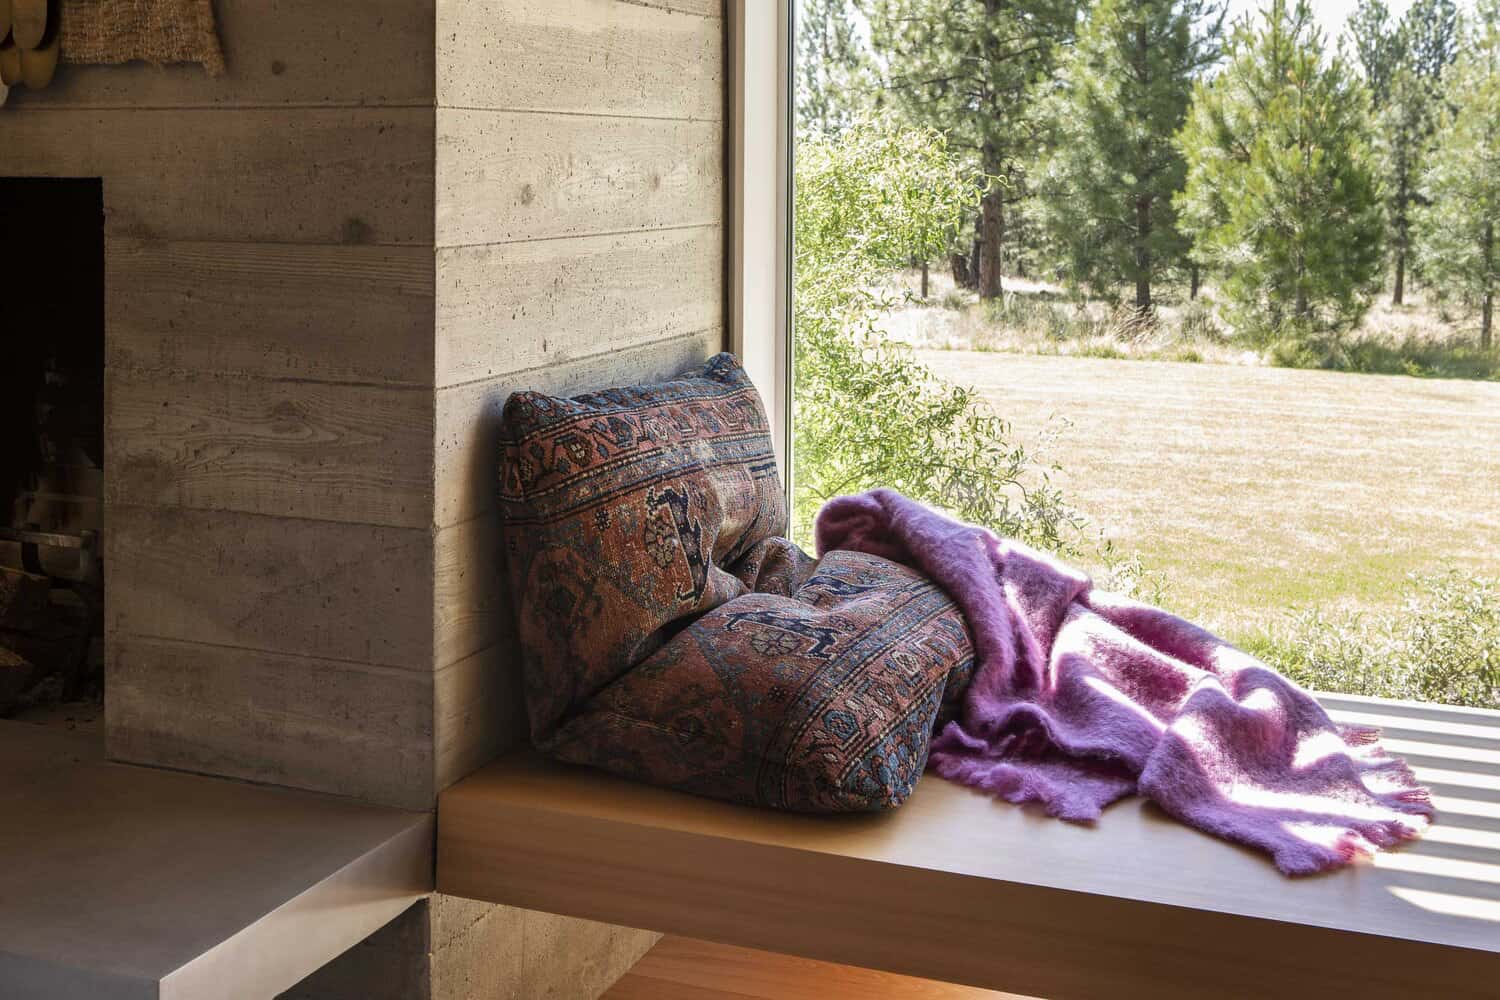 contemporary-living-room-window-seat